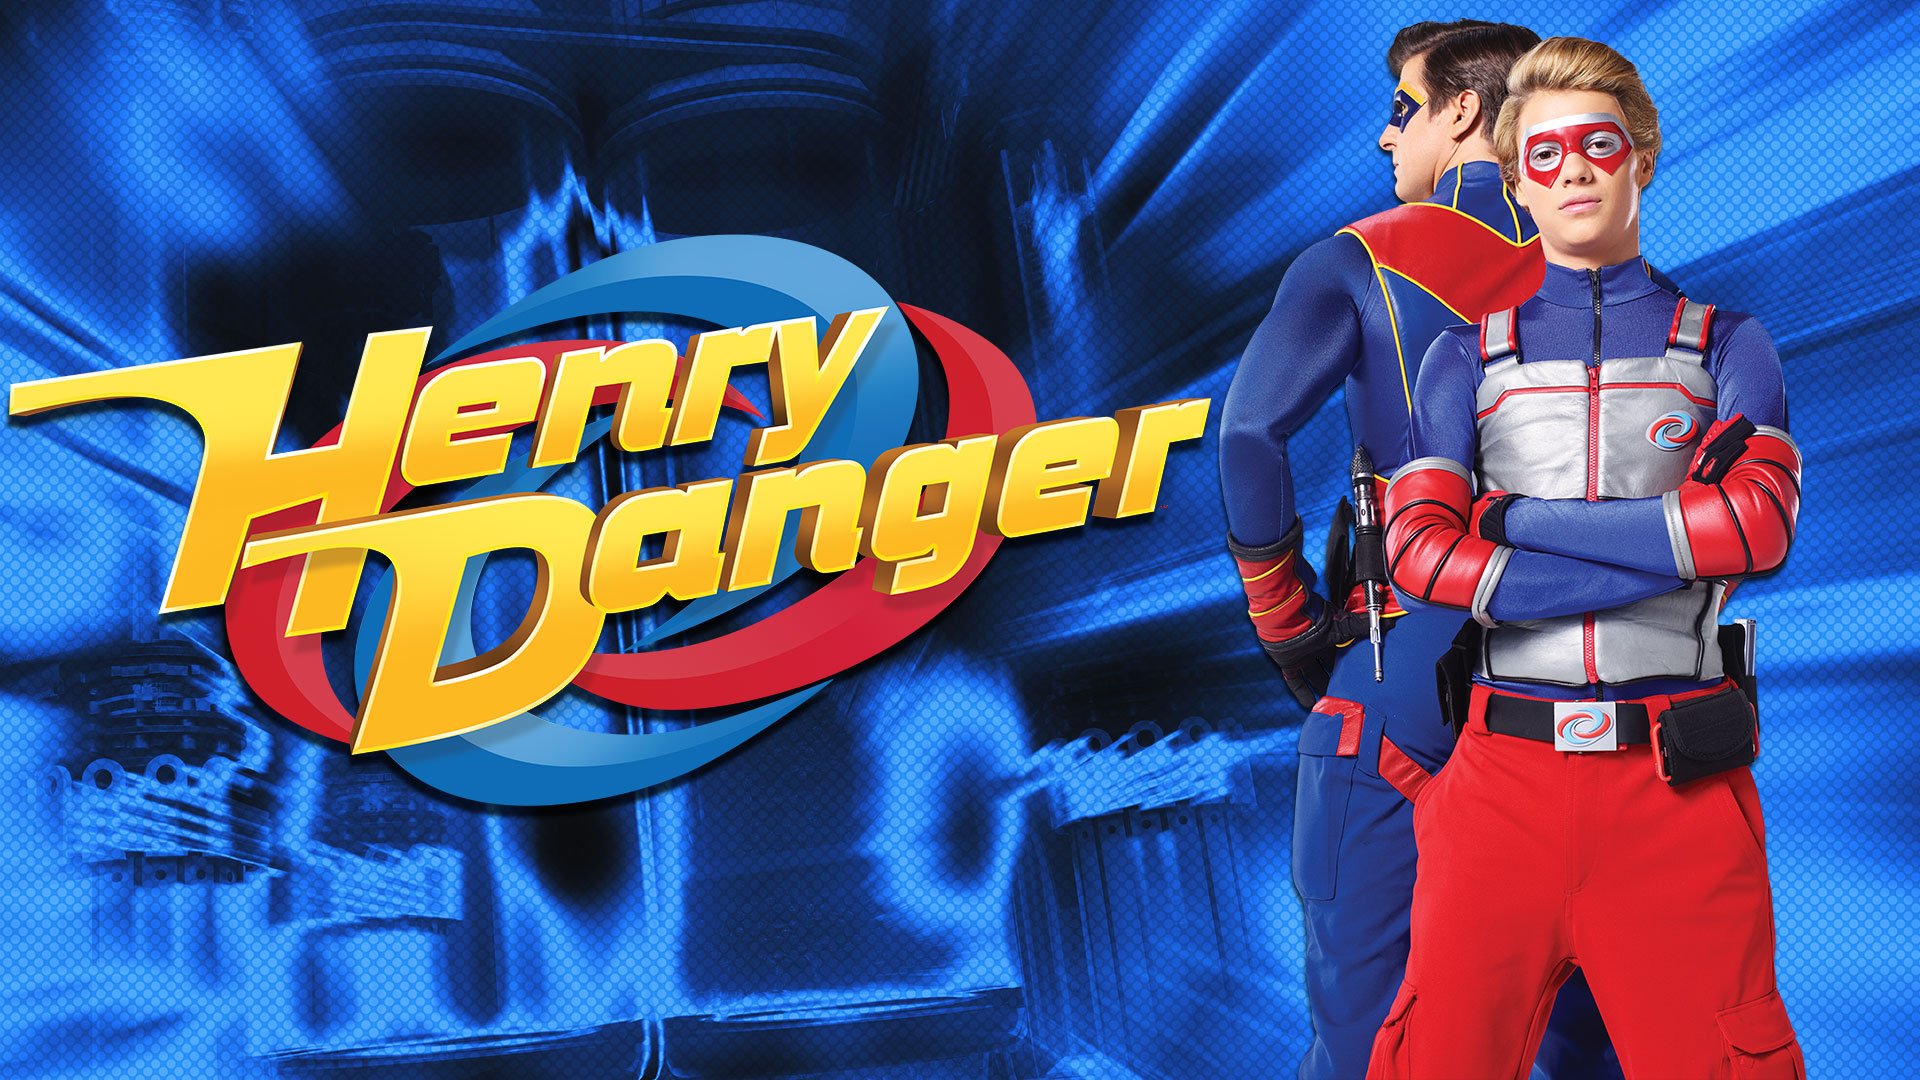 Watch Henry Danger Online - Stream Full Episodes.